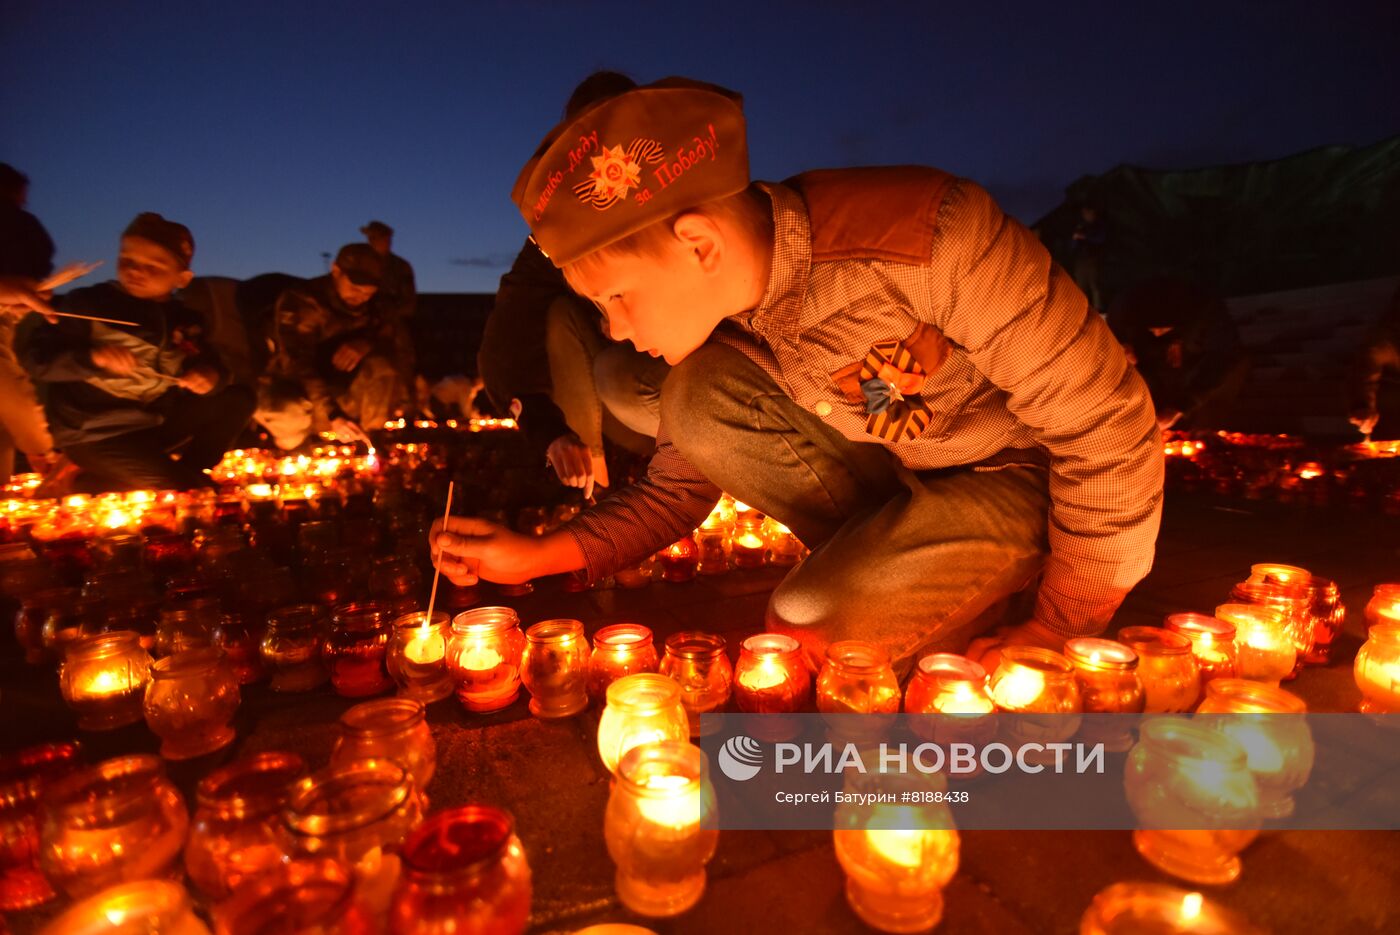 Акция "Свеча памяти" в Донецке